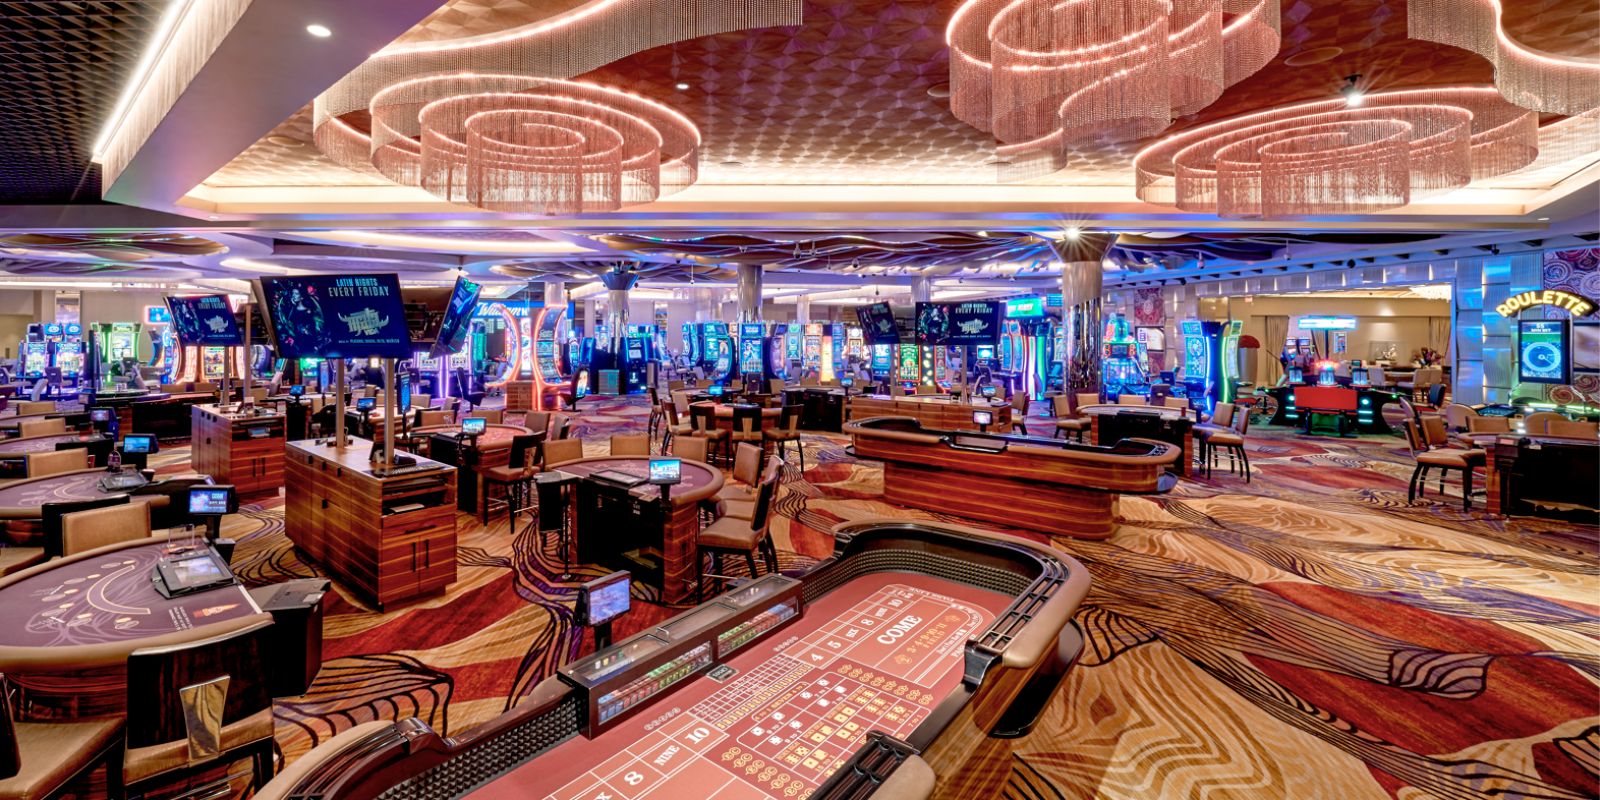 SAHARA Las Vegas Casino - The Best of Las Vegas Gaming Starts Here